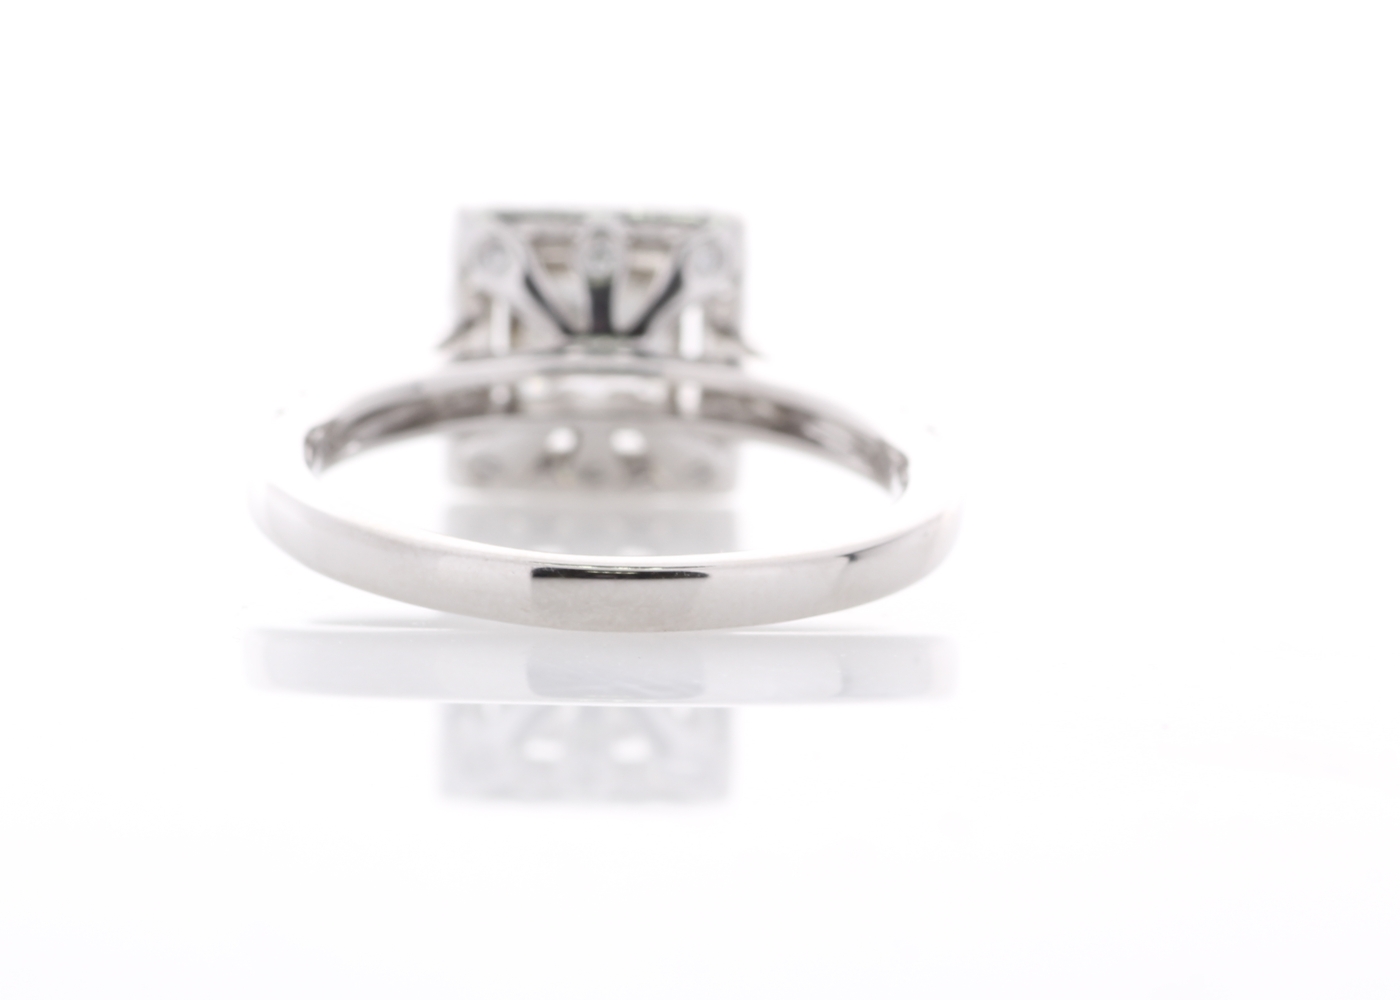 18ct White Gold Princess Cut Diamond Ring 1.34 Carats - Image 3 of 5